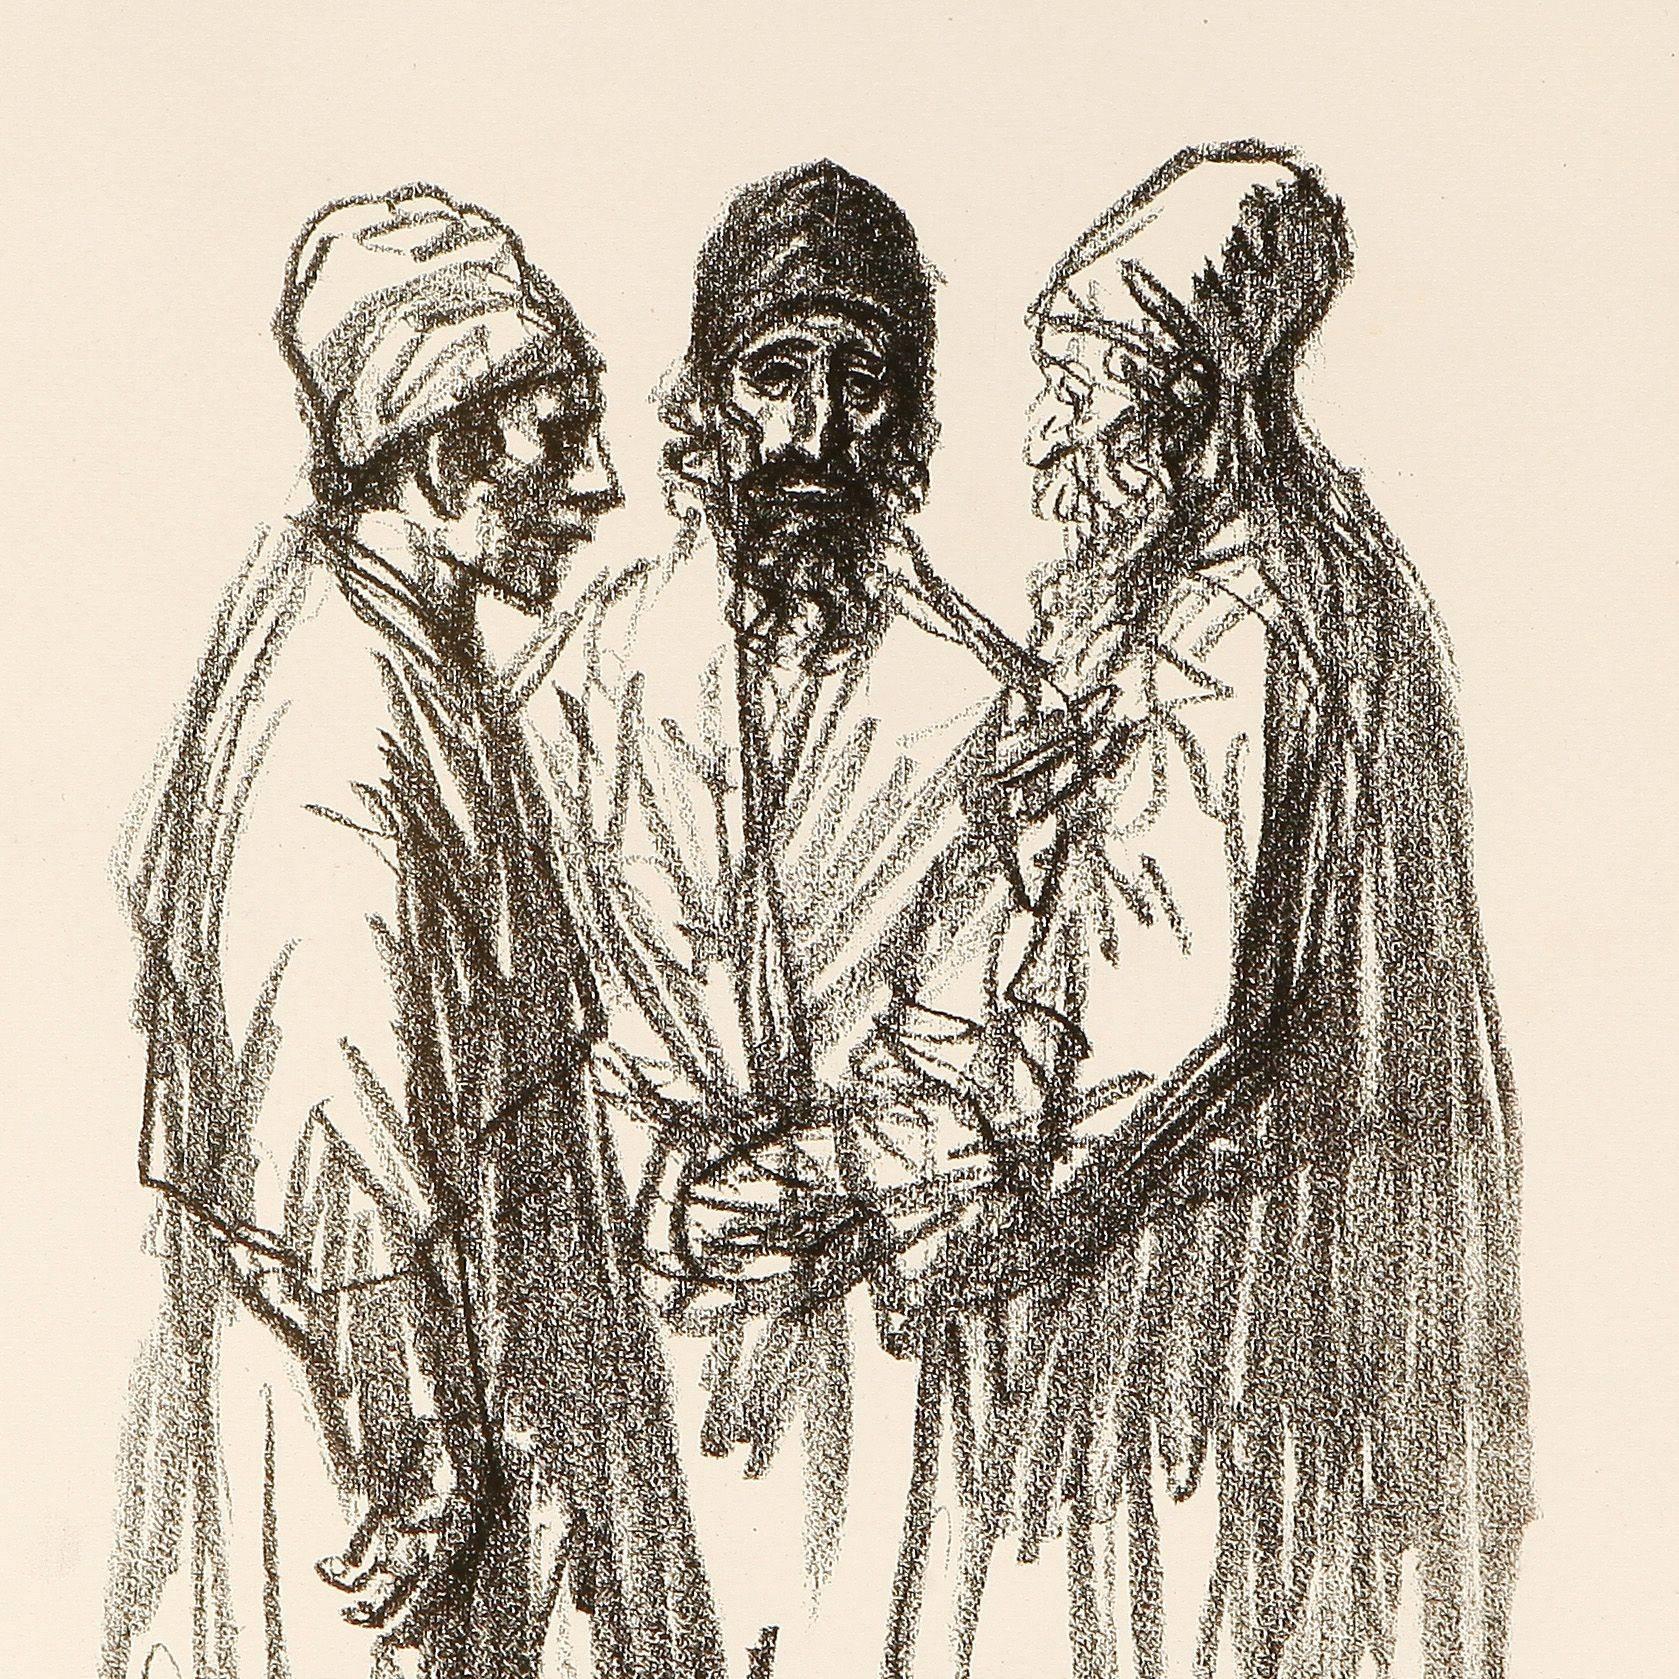 Les Marchands - The Dealers - Mercantilo - Impressionist Print by Théophile Alexandre Steinlen